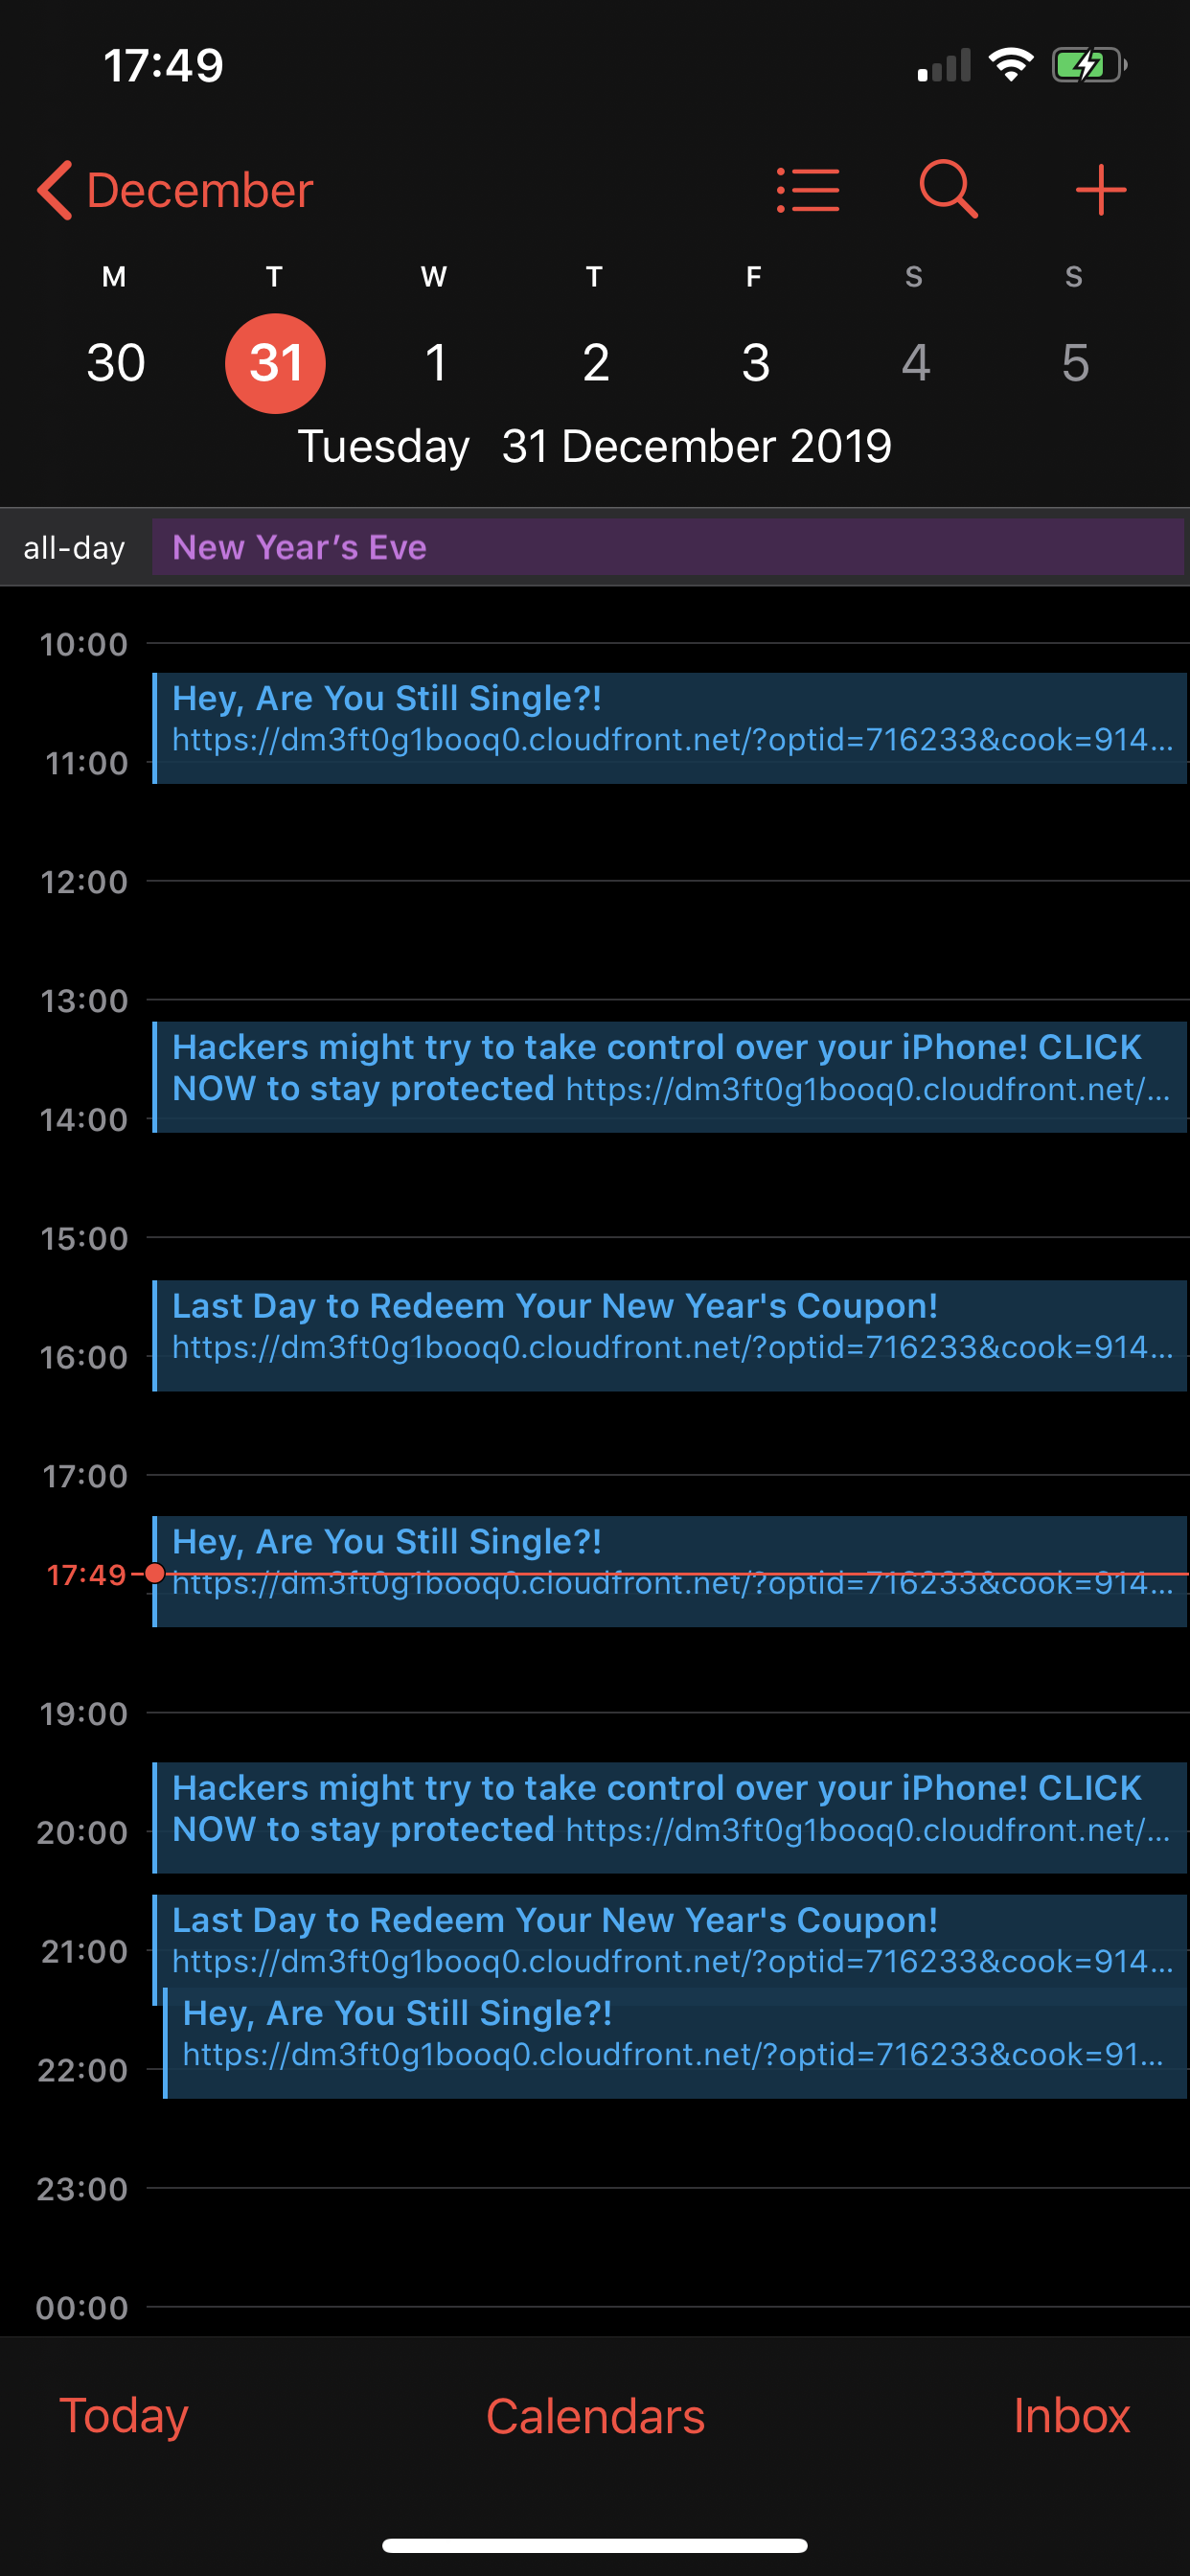 Hack/Virus events in calendar Apple Community